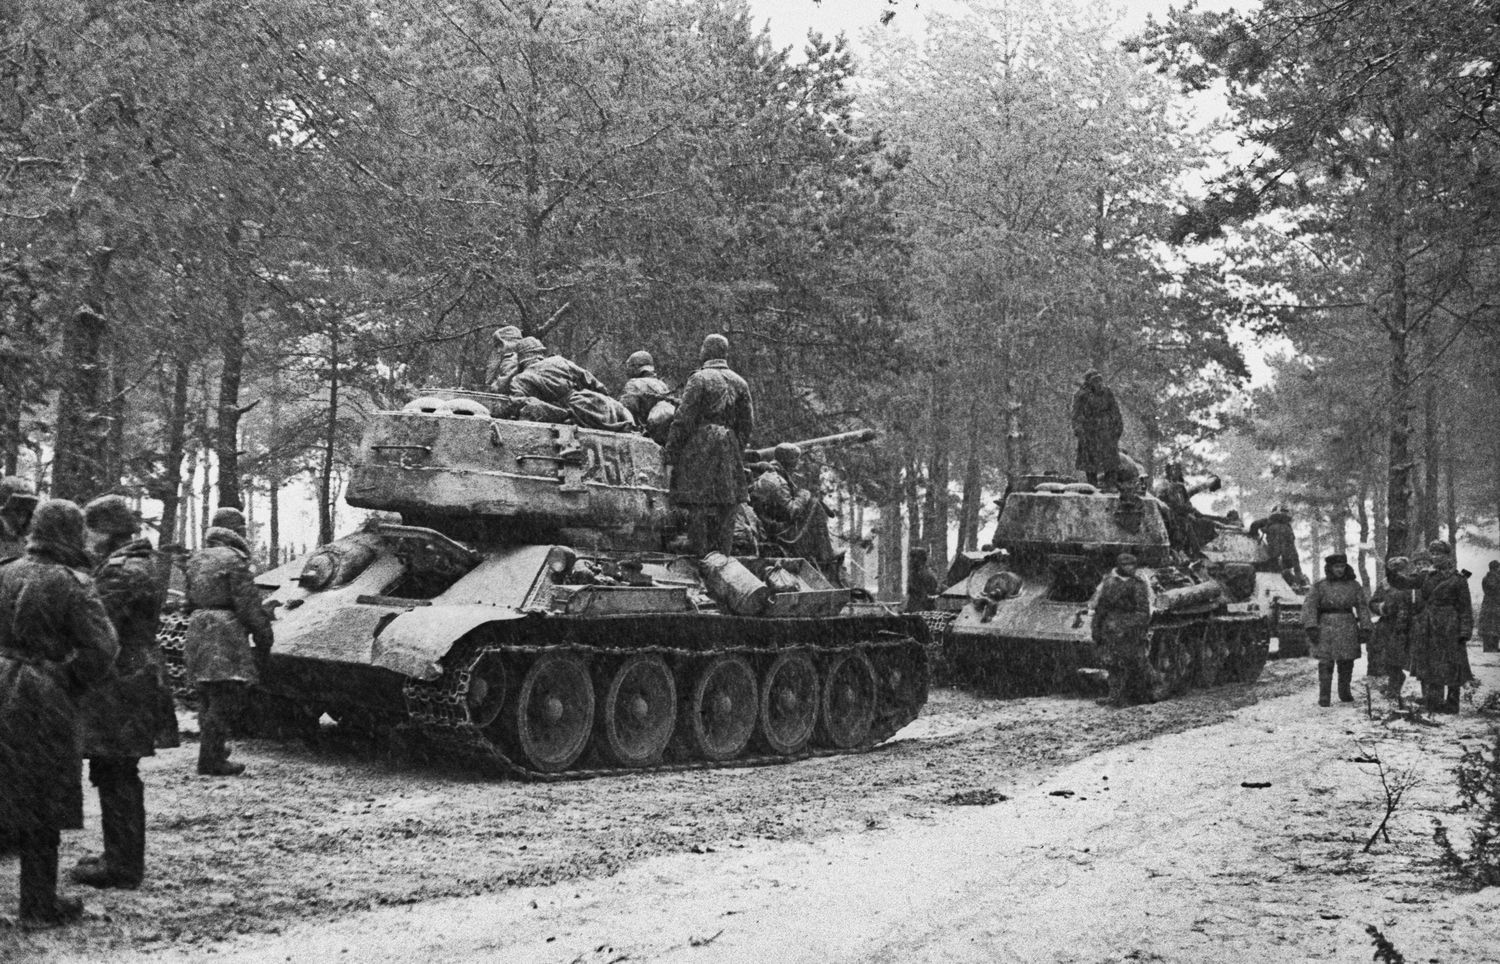 Т-34/85, the Winter 1945